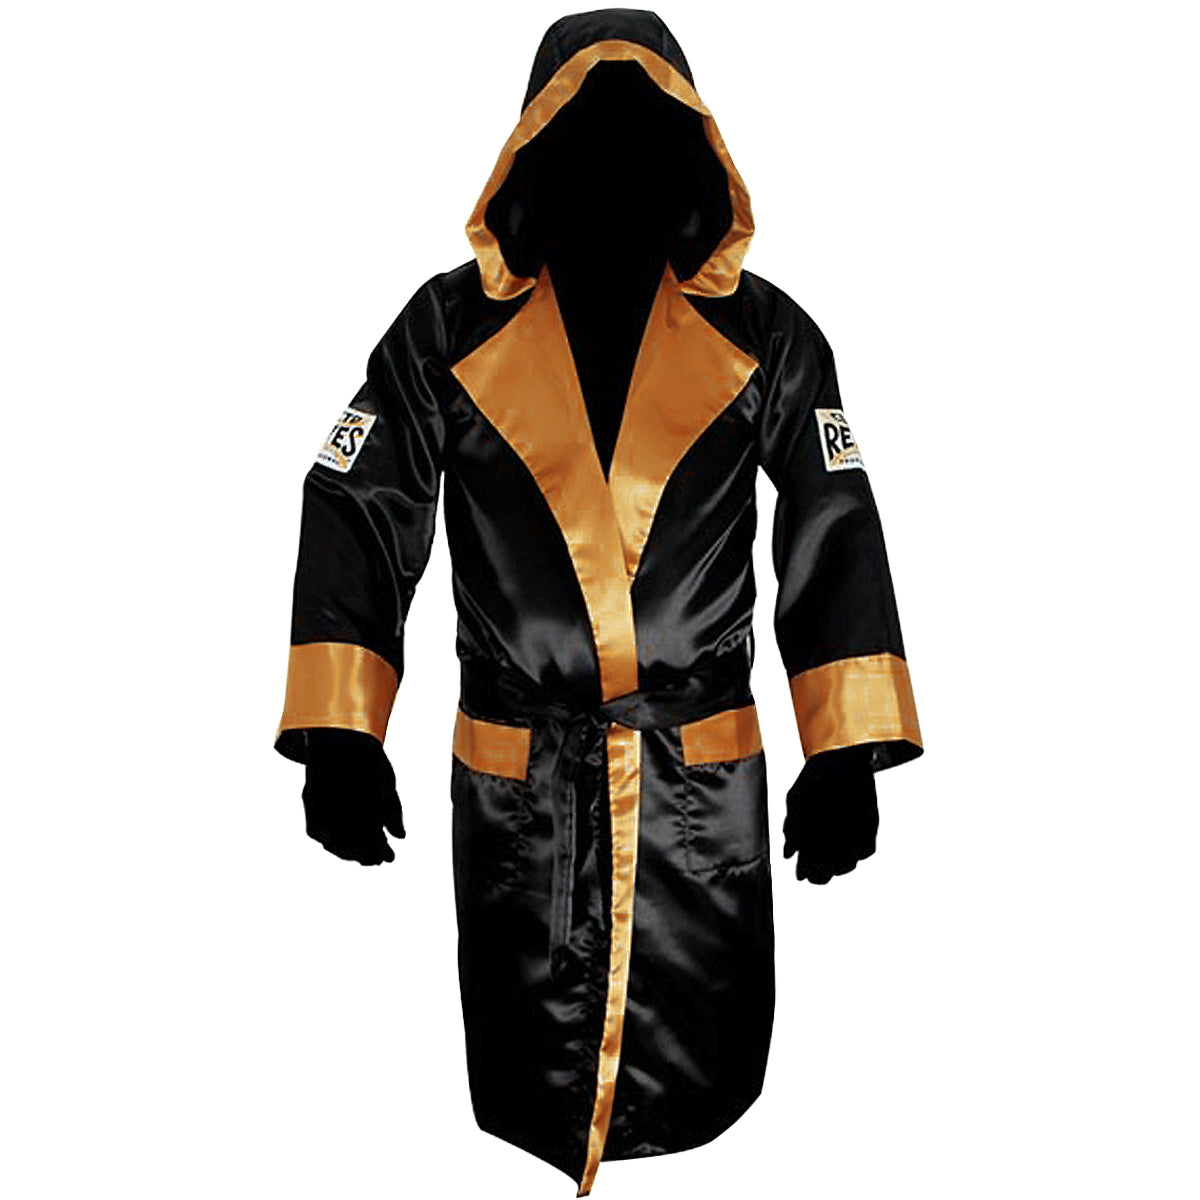 Cleto Reyes Satin Boxing Robe with Hood - Black/Gold Cleto Reyes